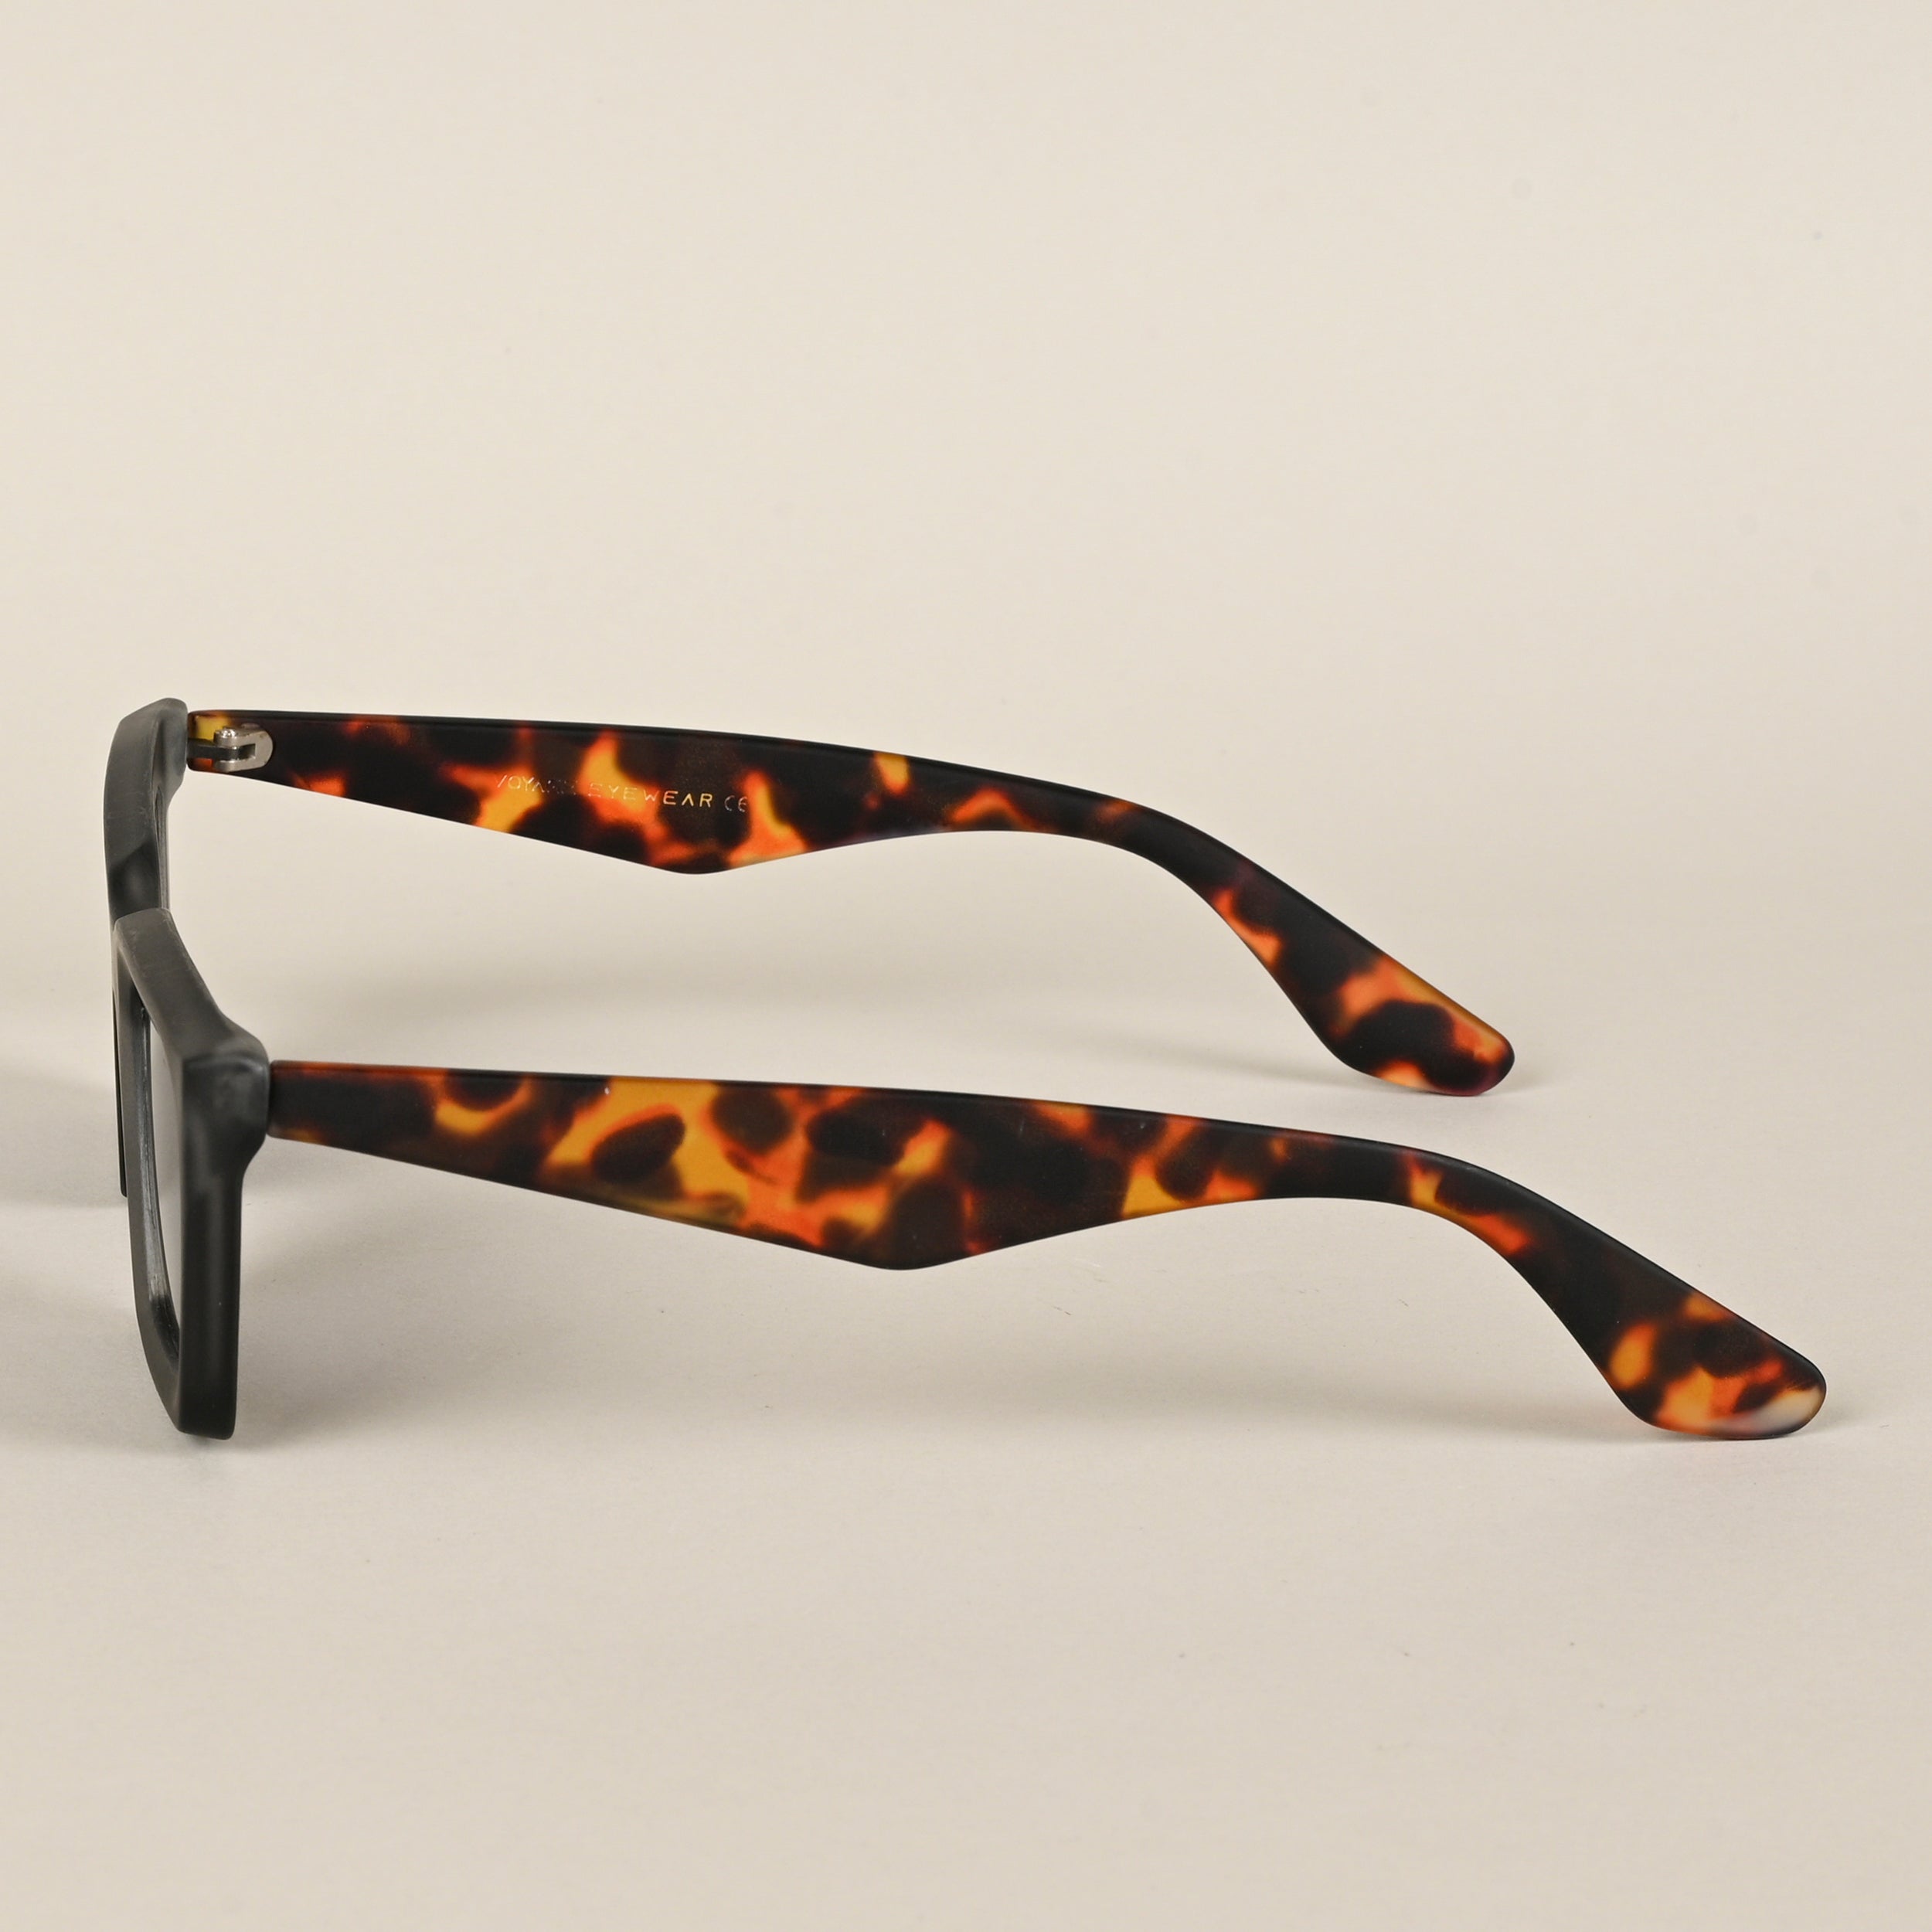 Voyage Black Wayfarer Sunglasses for Men & Women (86632MG4124)